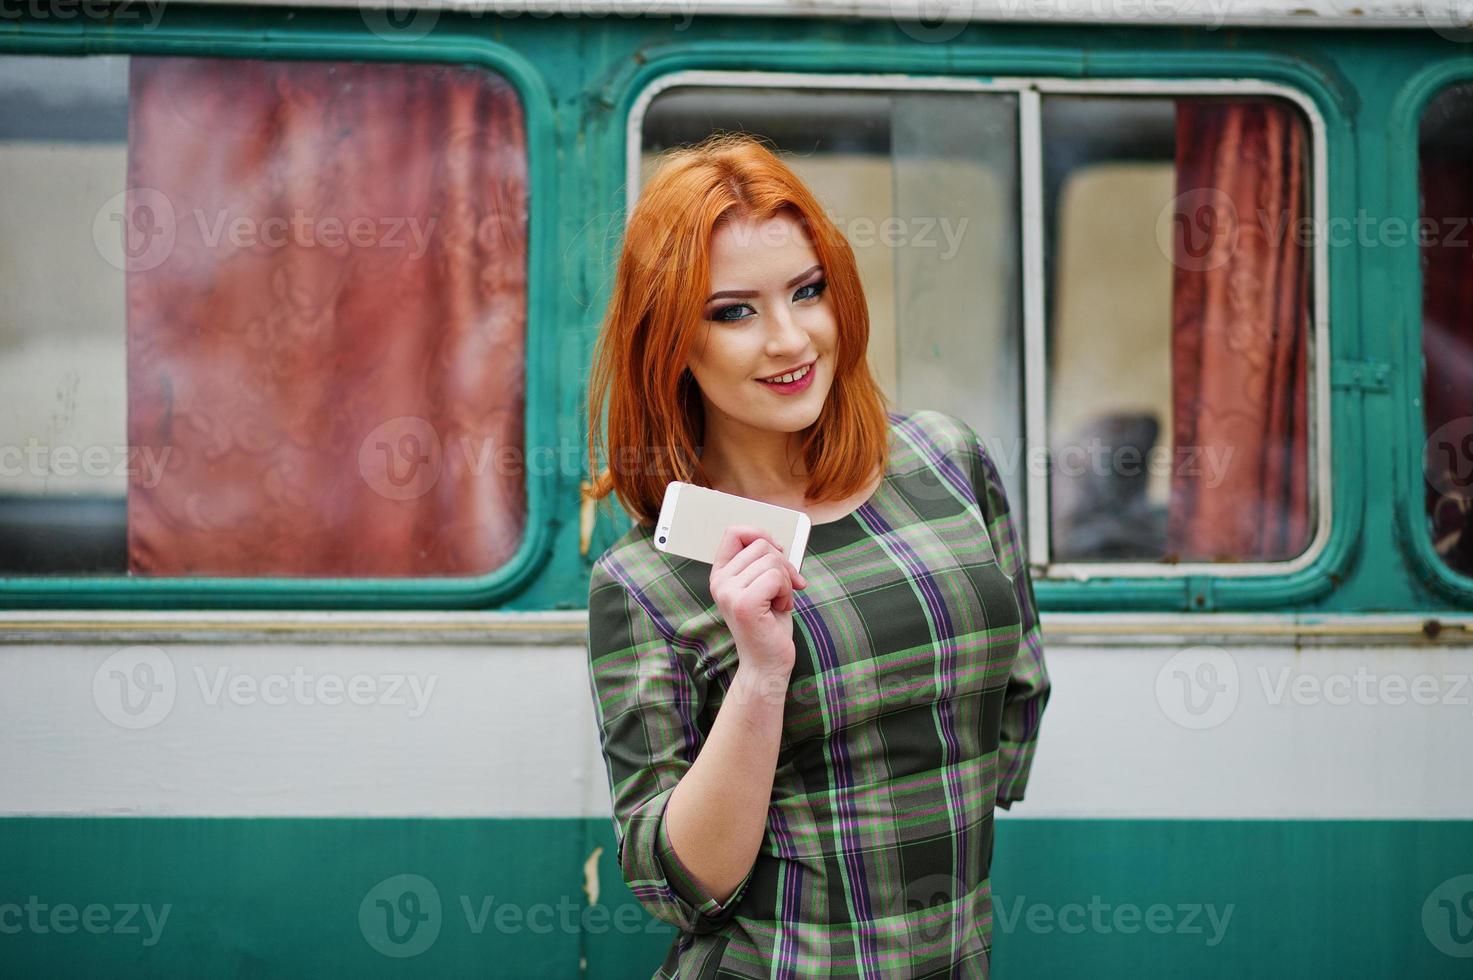 senhora jovem ruiva com telefone celular móvel e fones de ouvido, vestindo no vestido xadrez fundo velho ônibus de minivan turquesa vintage. foto